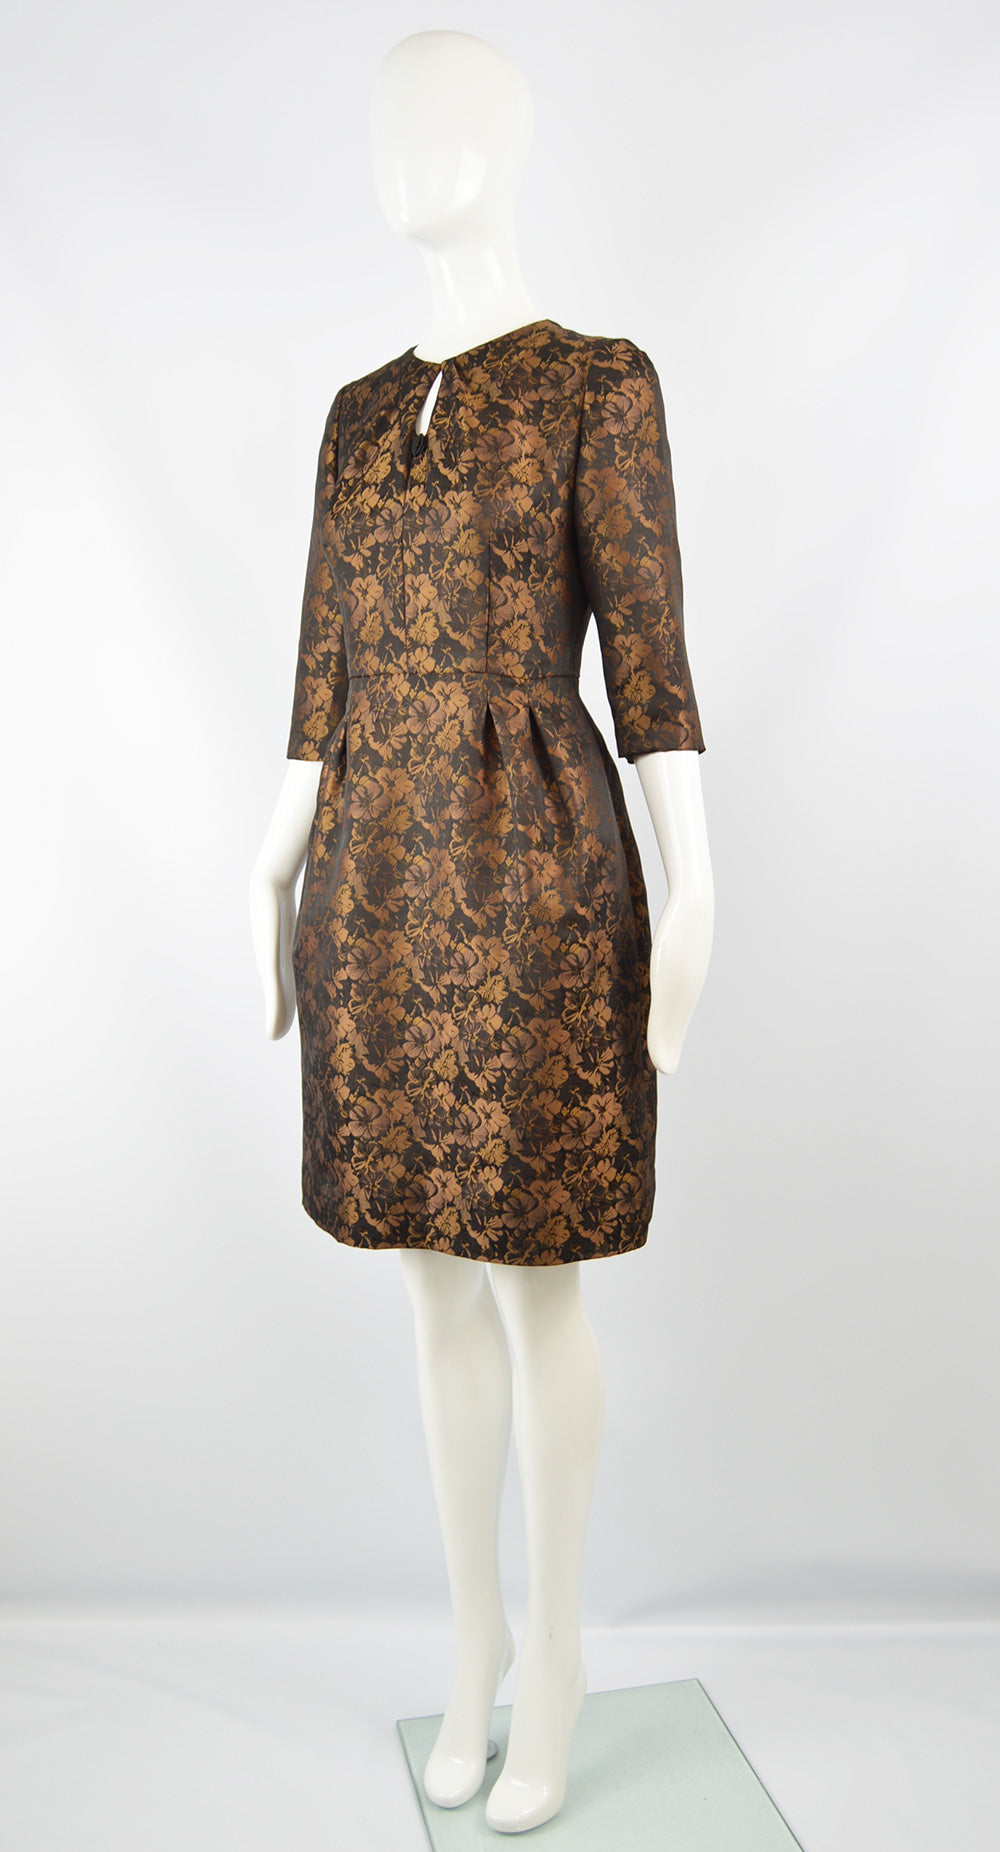 True Italian Couture Bronze & Black Jacquard Dress, 1980s